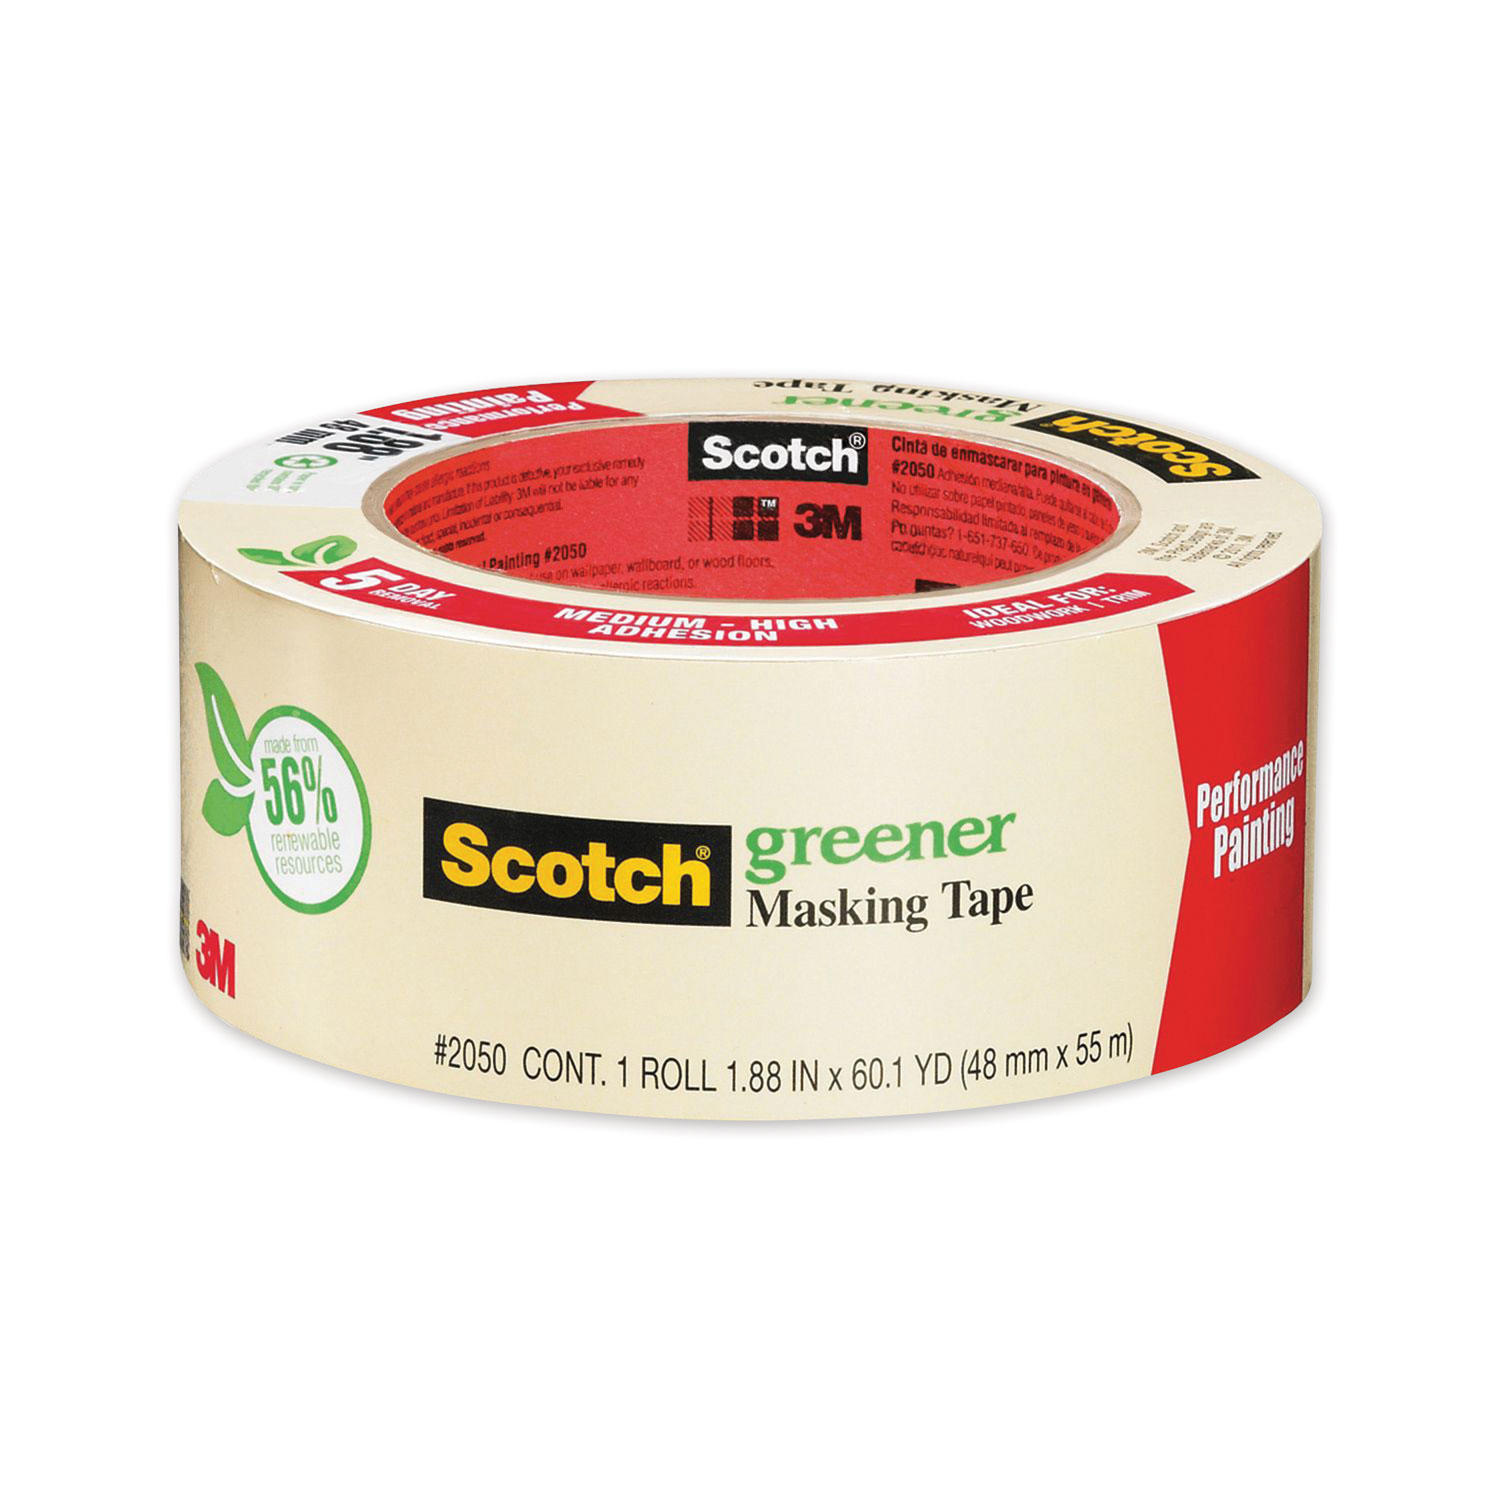 Scotch® Greener Masking Tape 2050, 3 Core, 1.88 x 60 yds, Beige